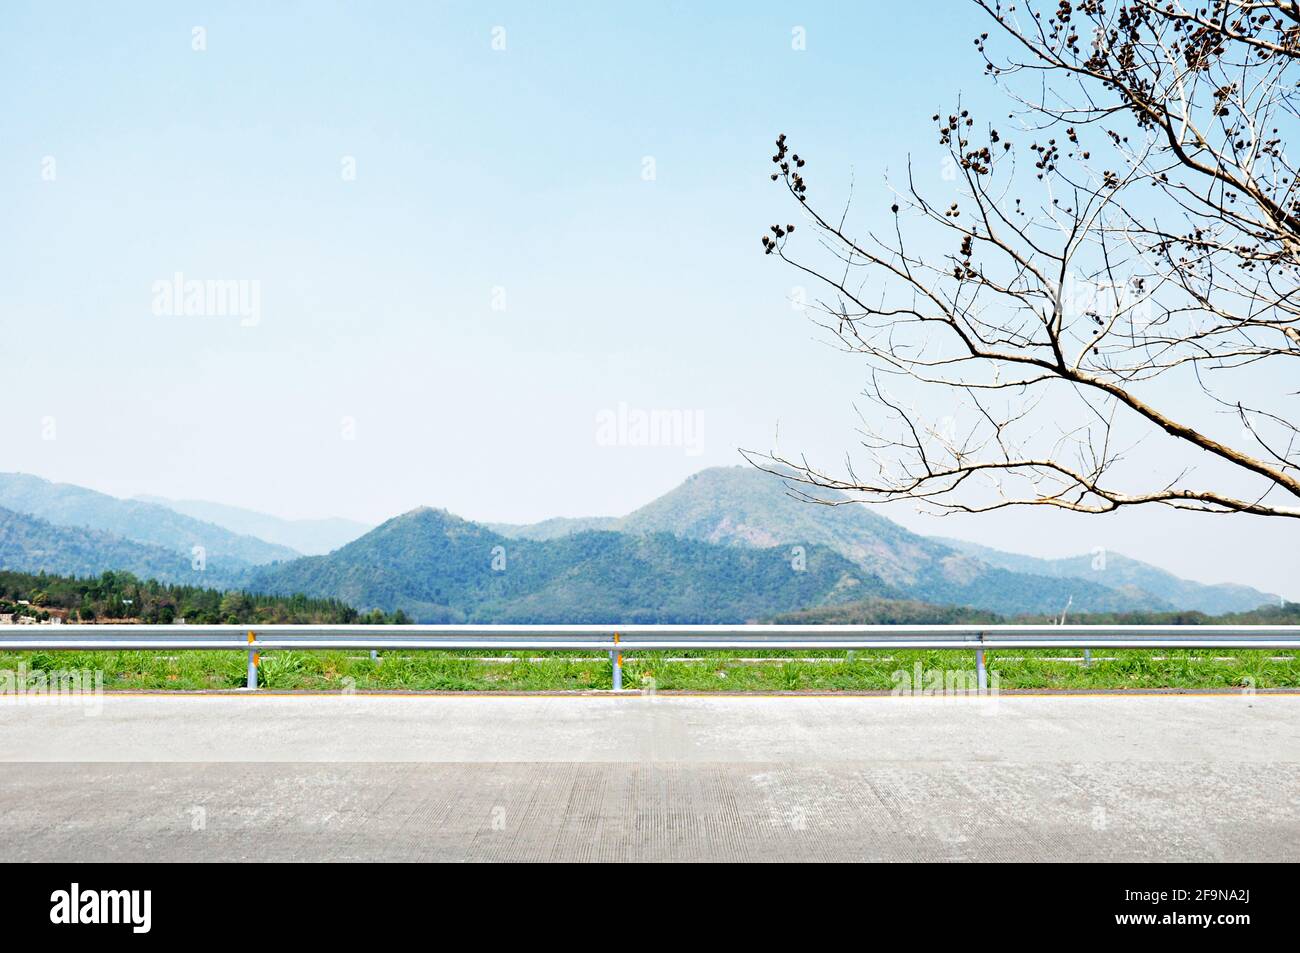 Beautiful mountain scenery - roadside view Stock Photo